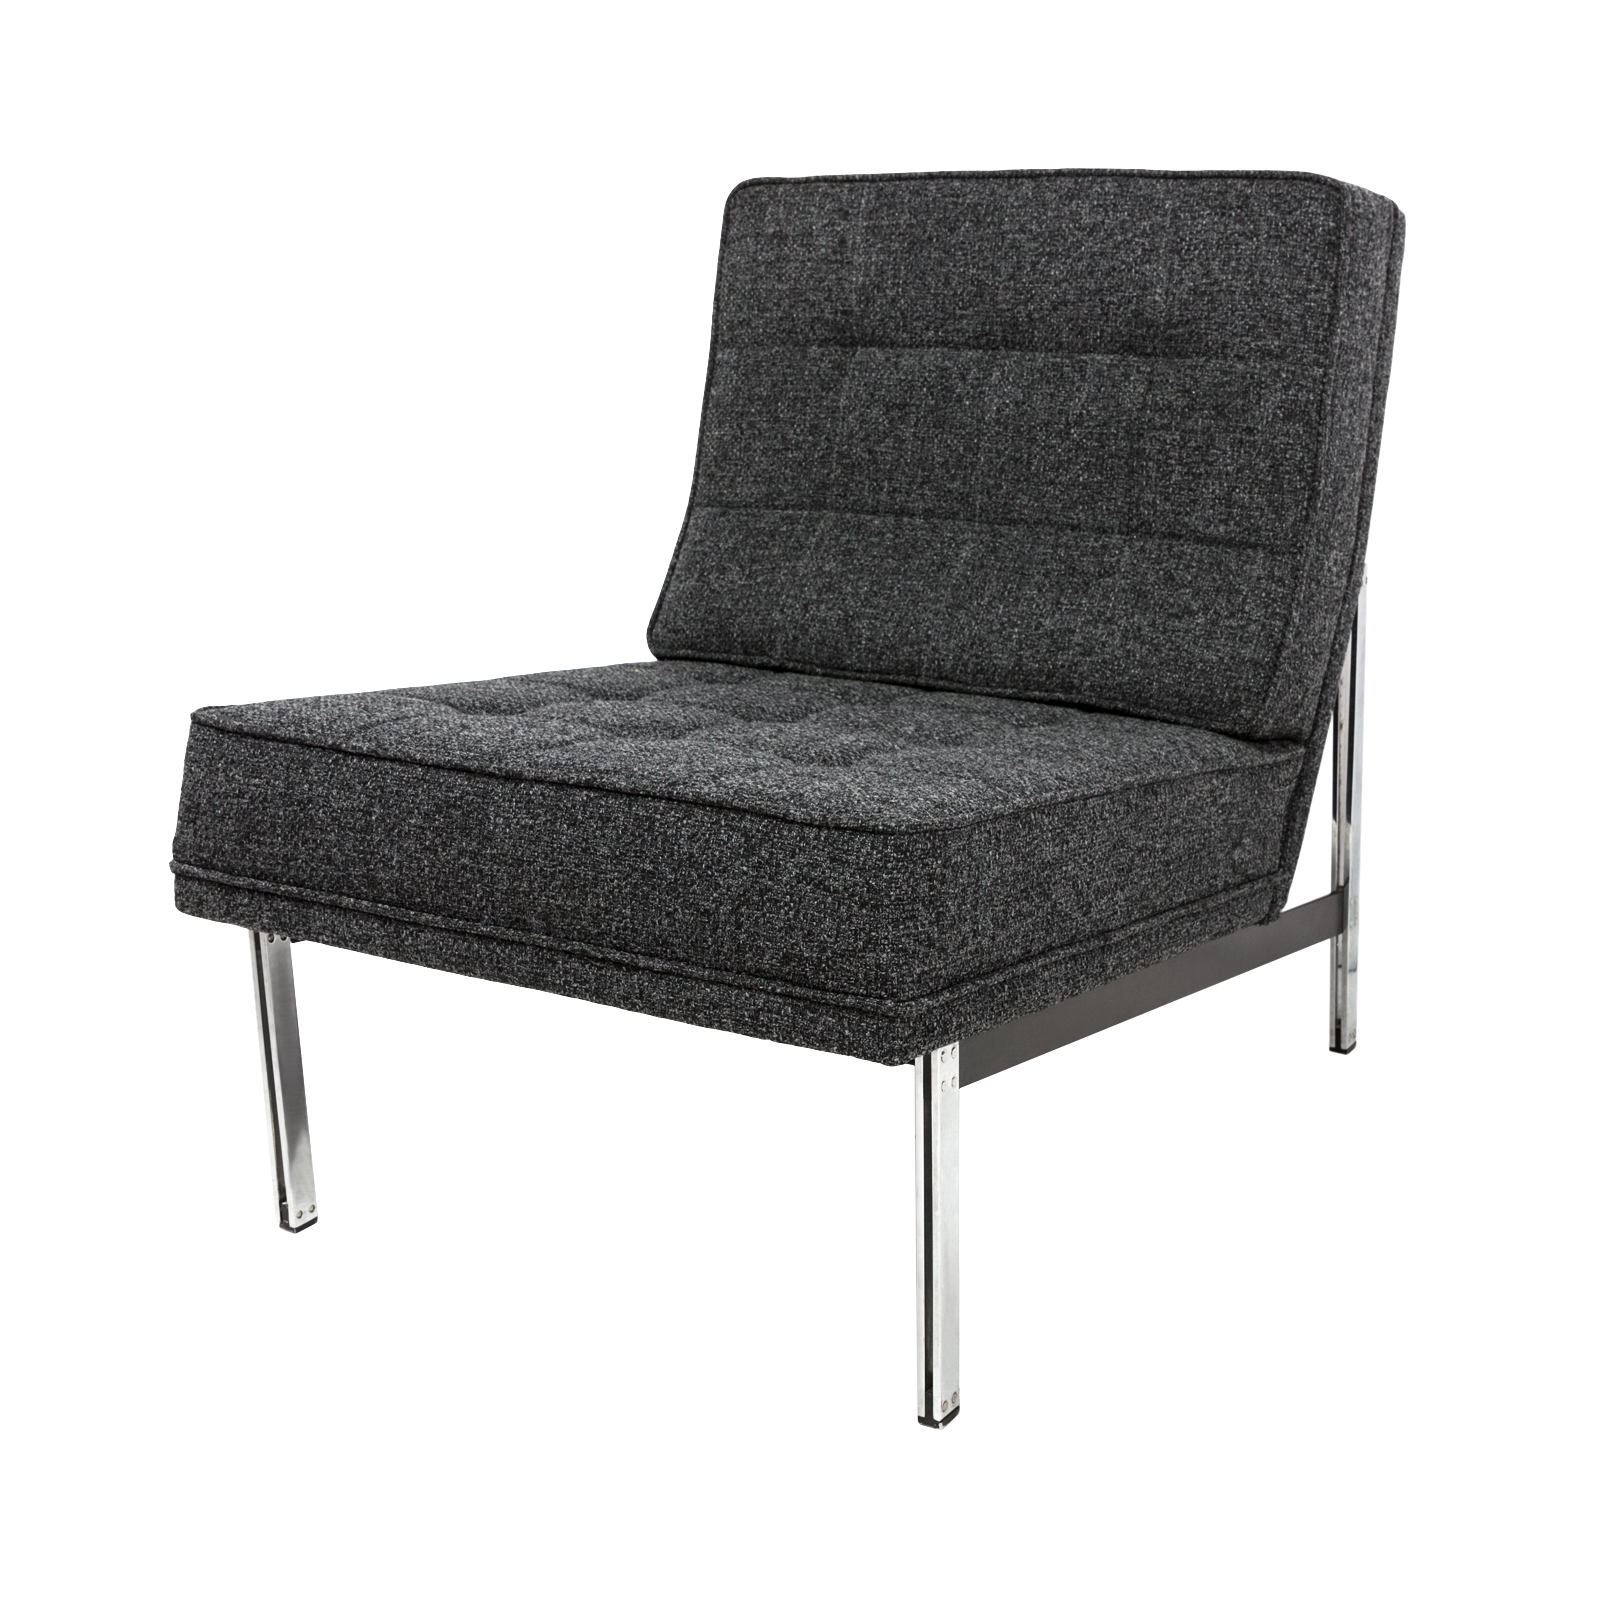 Split Rail Lounge Chair Rentals | Event Furniture Rental